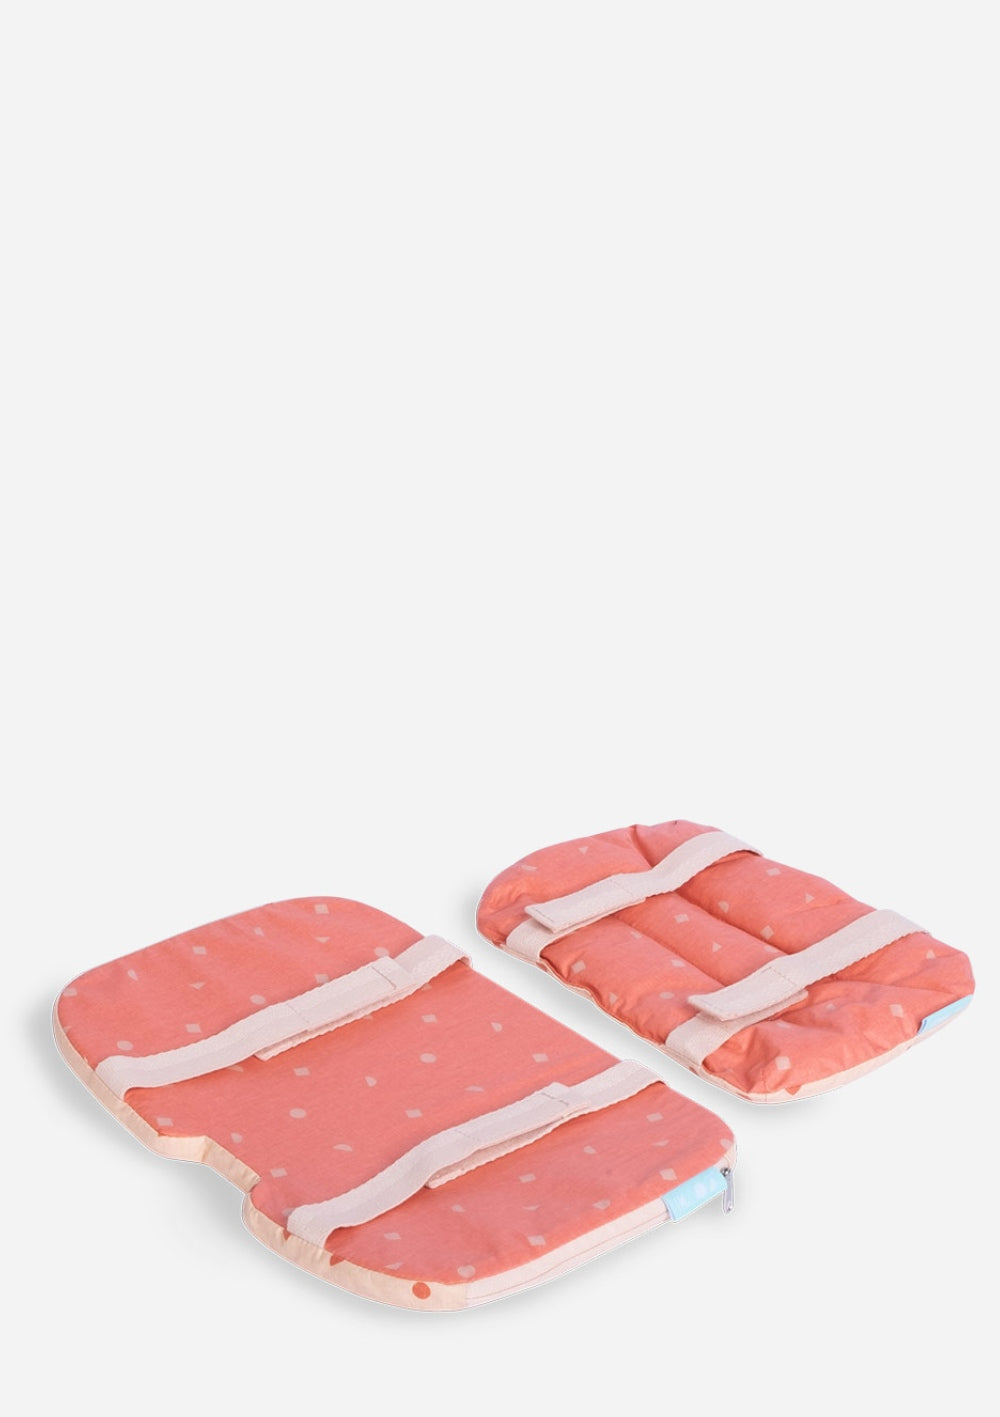 KAOS Klapp Kissen-Set Coral Pink